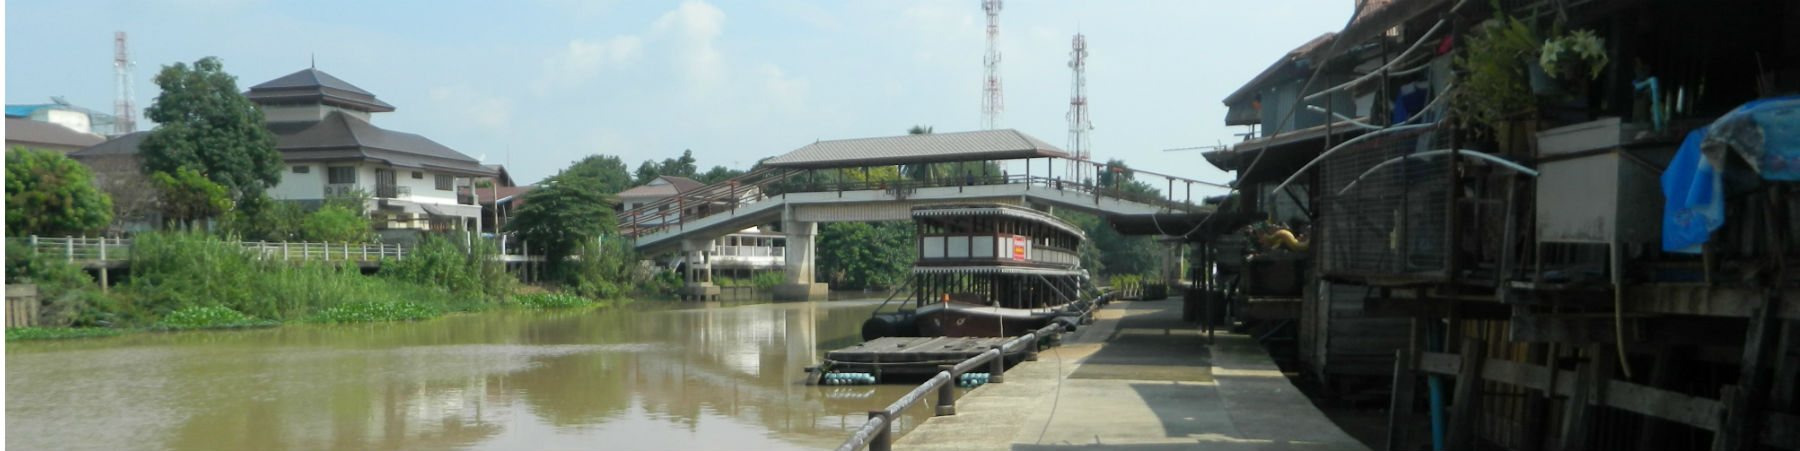 Tha Chin River at 100 Years Rim Nam Market, Sam Chuk District, Suphanburi Province